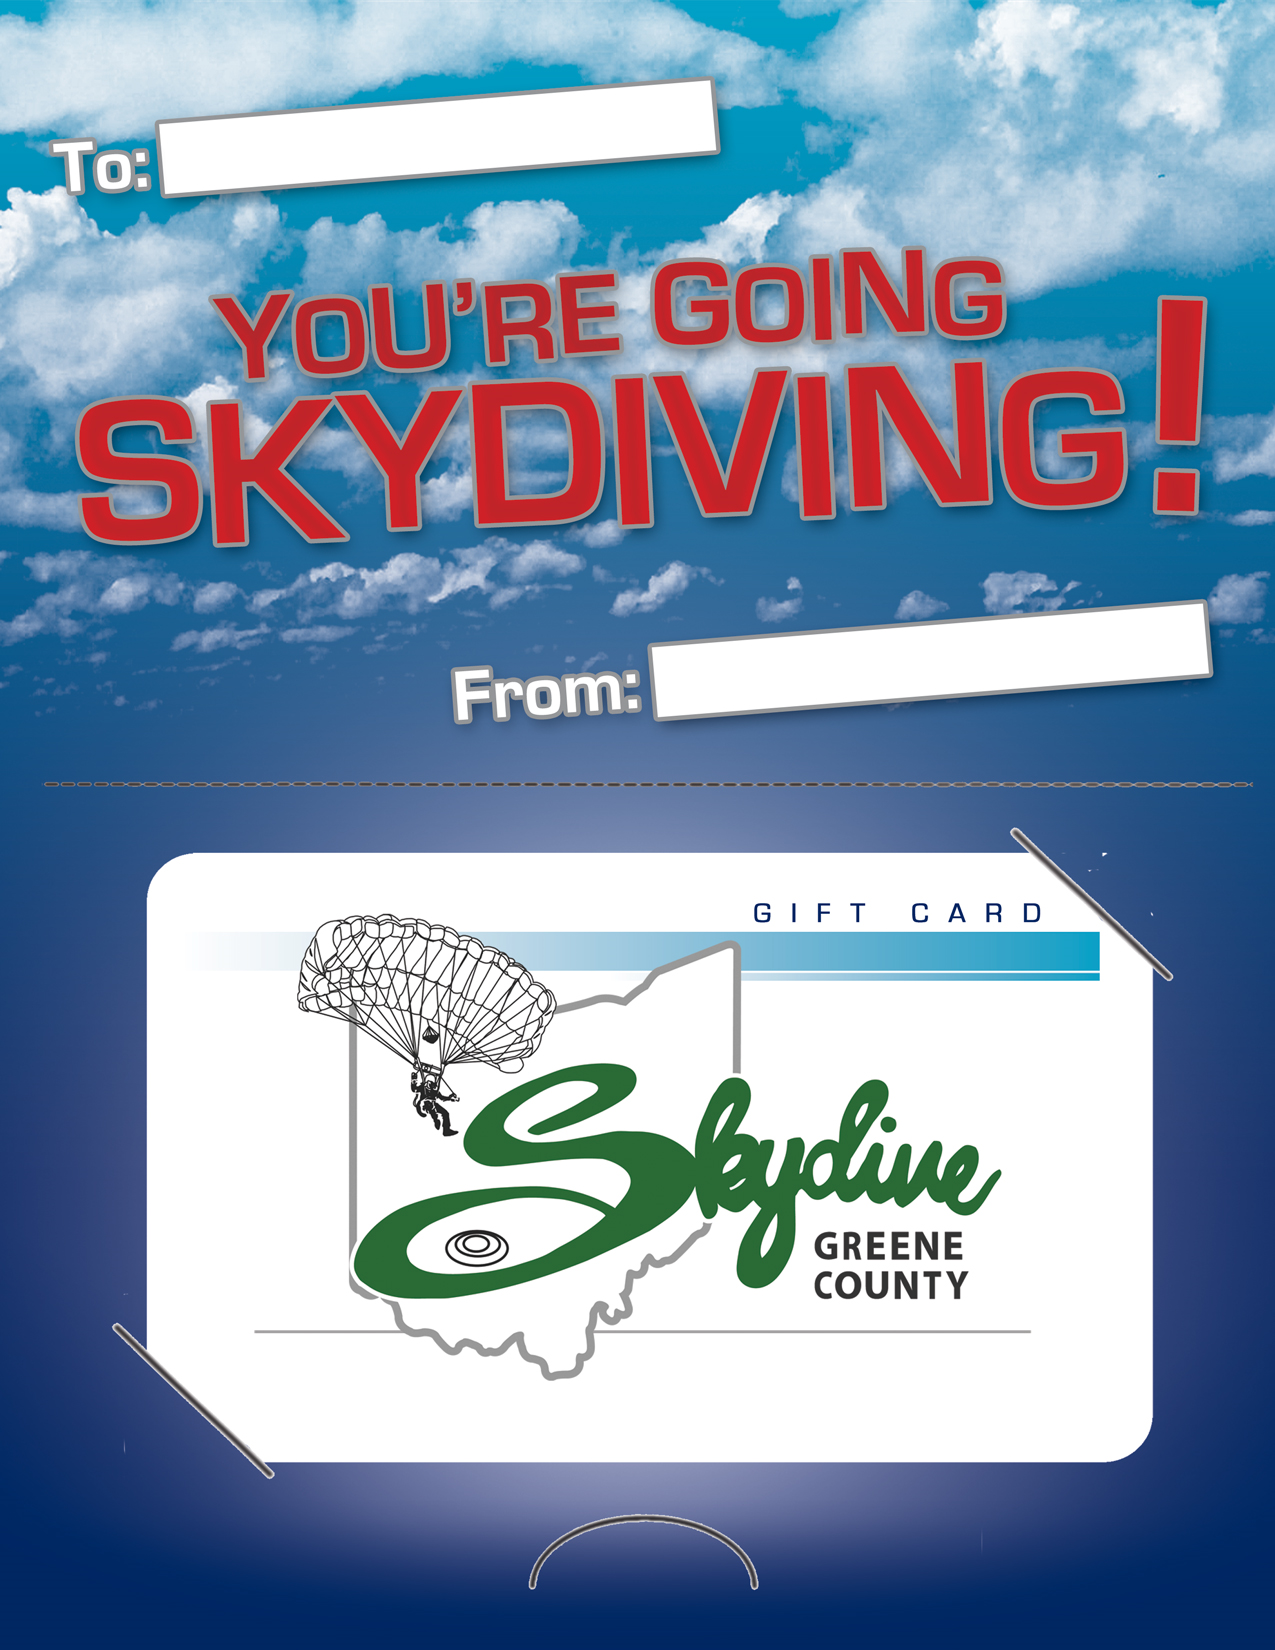 Skydive Greene County Skydiving the Ohio skies since 1961 photo